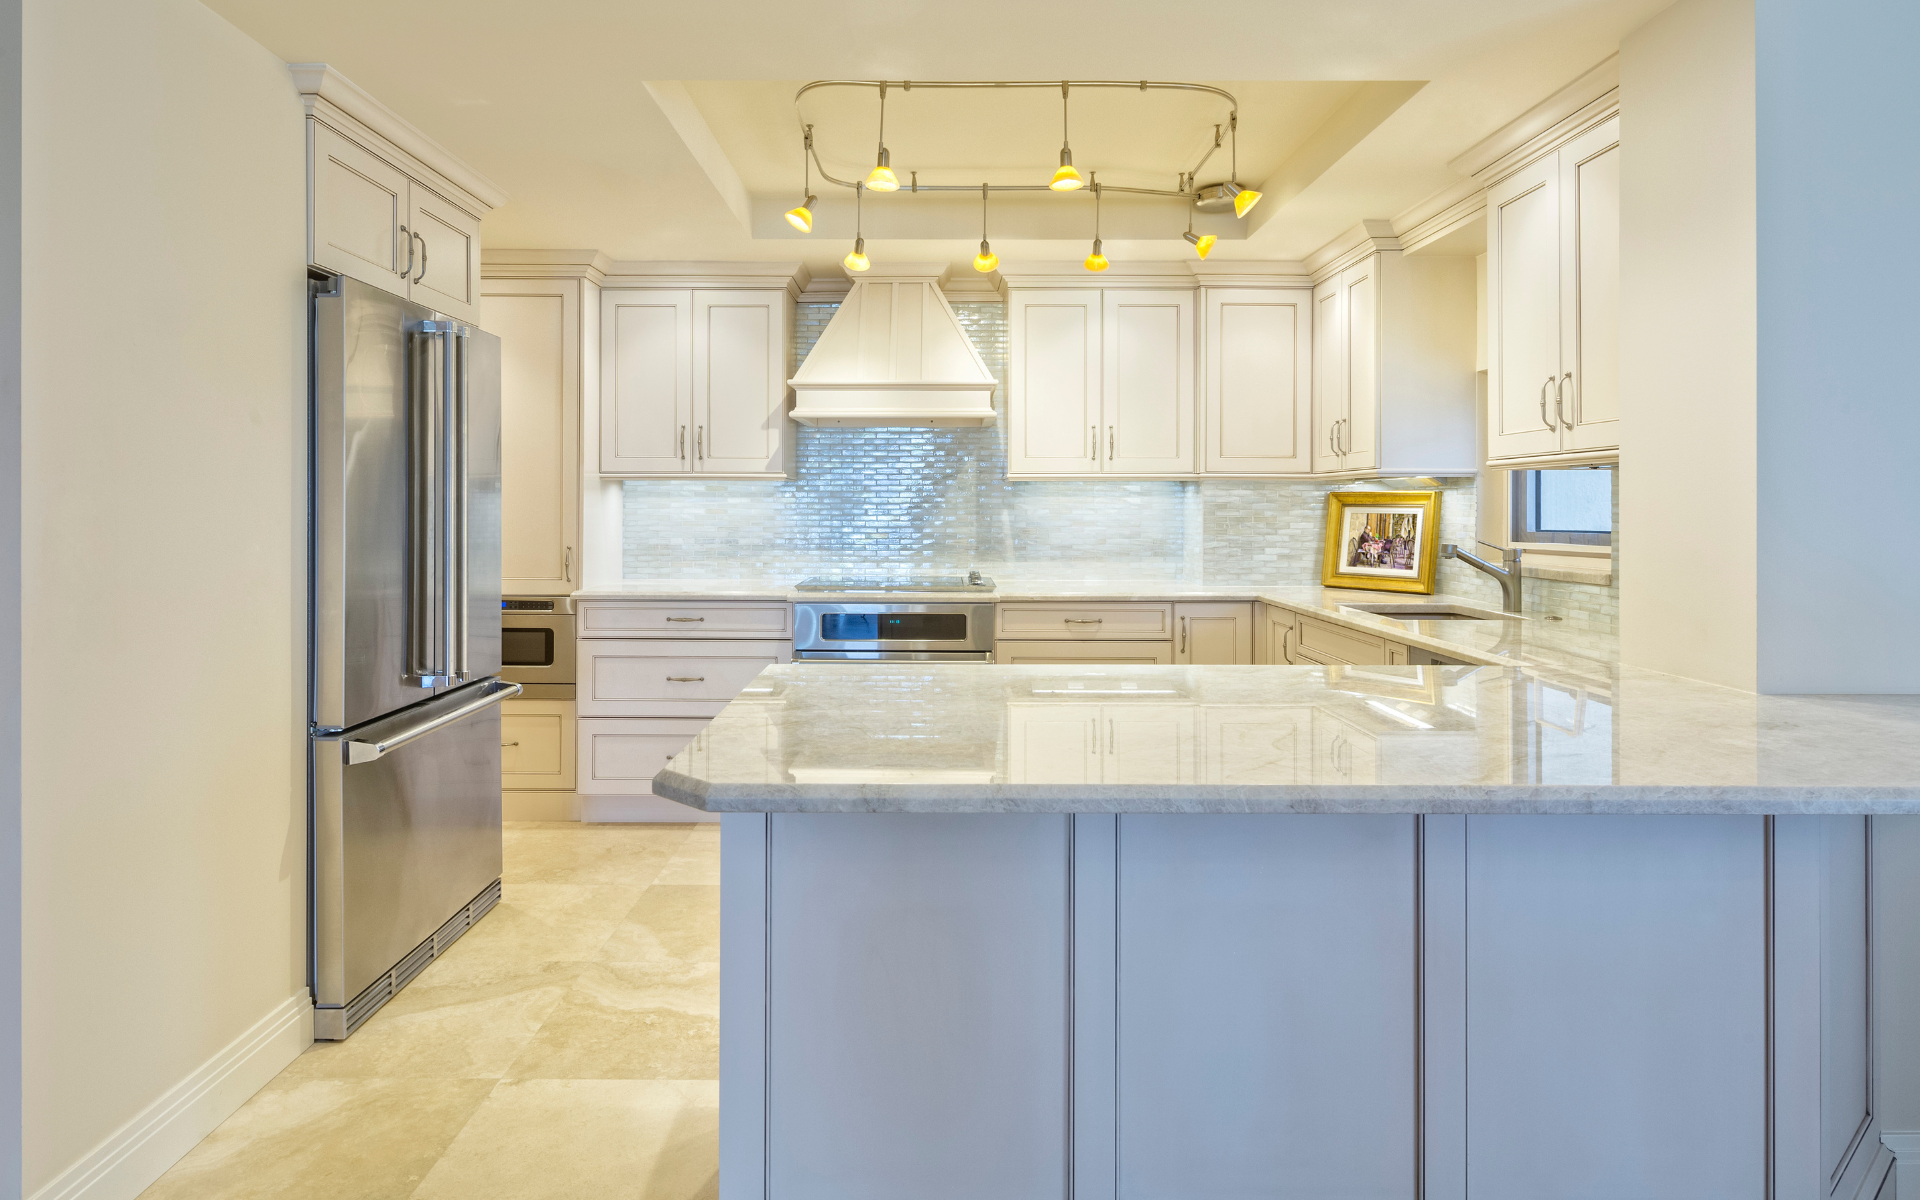 White kitchen cabinets and stainless steel refrigerator in modern kitchen